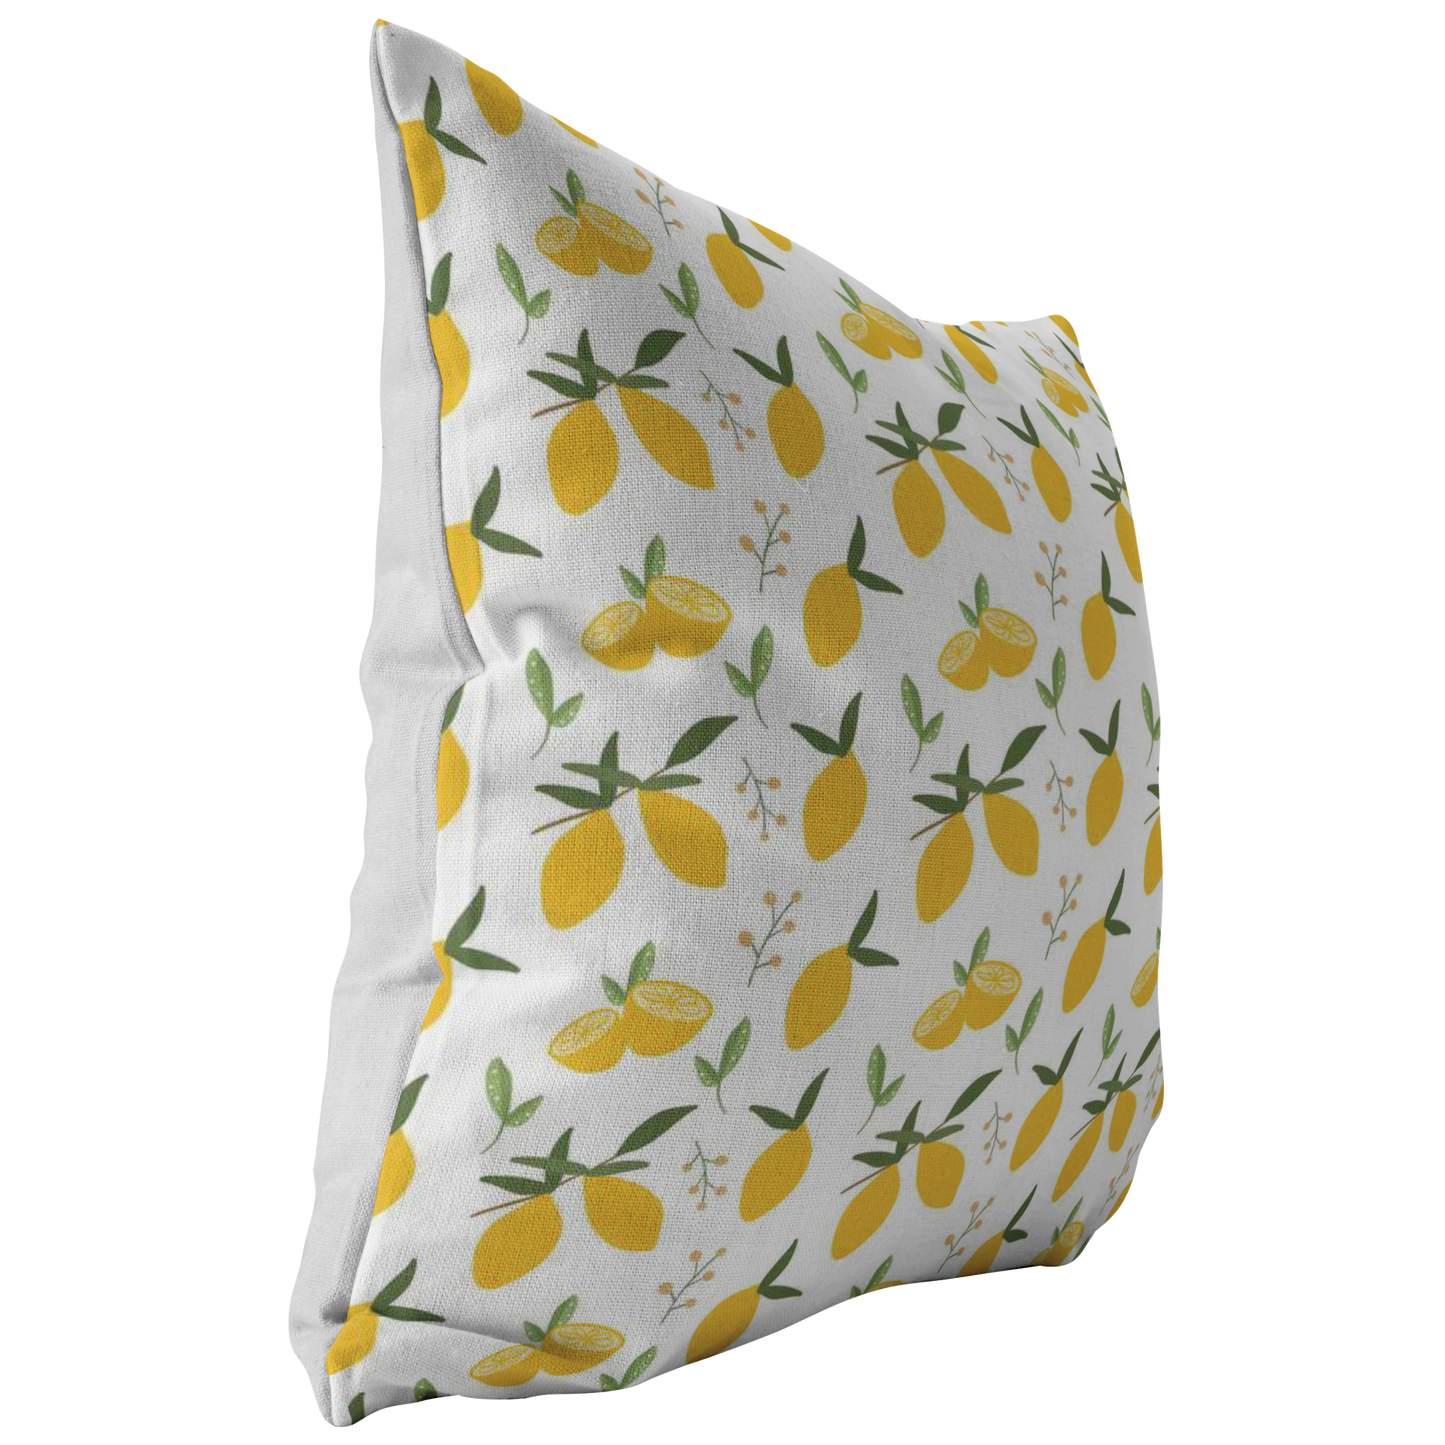 Lemon Throw Pillow Cover Home Decor Pillows Accent Decorative Sofa Unique Pillows